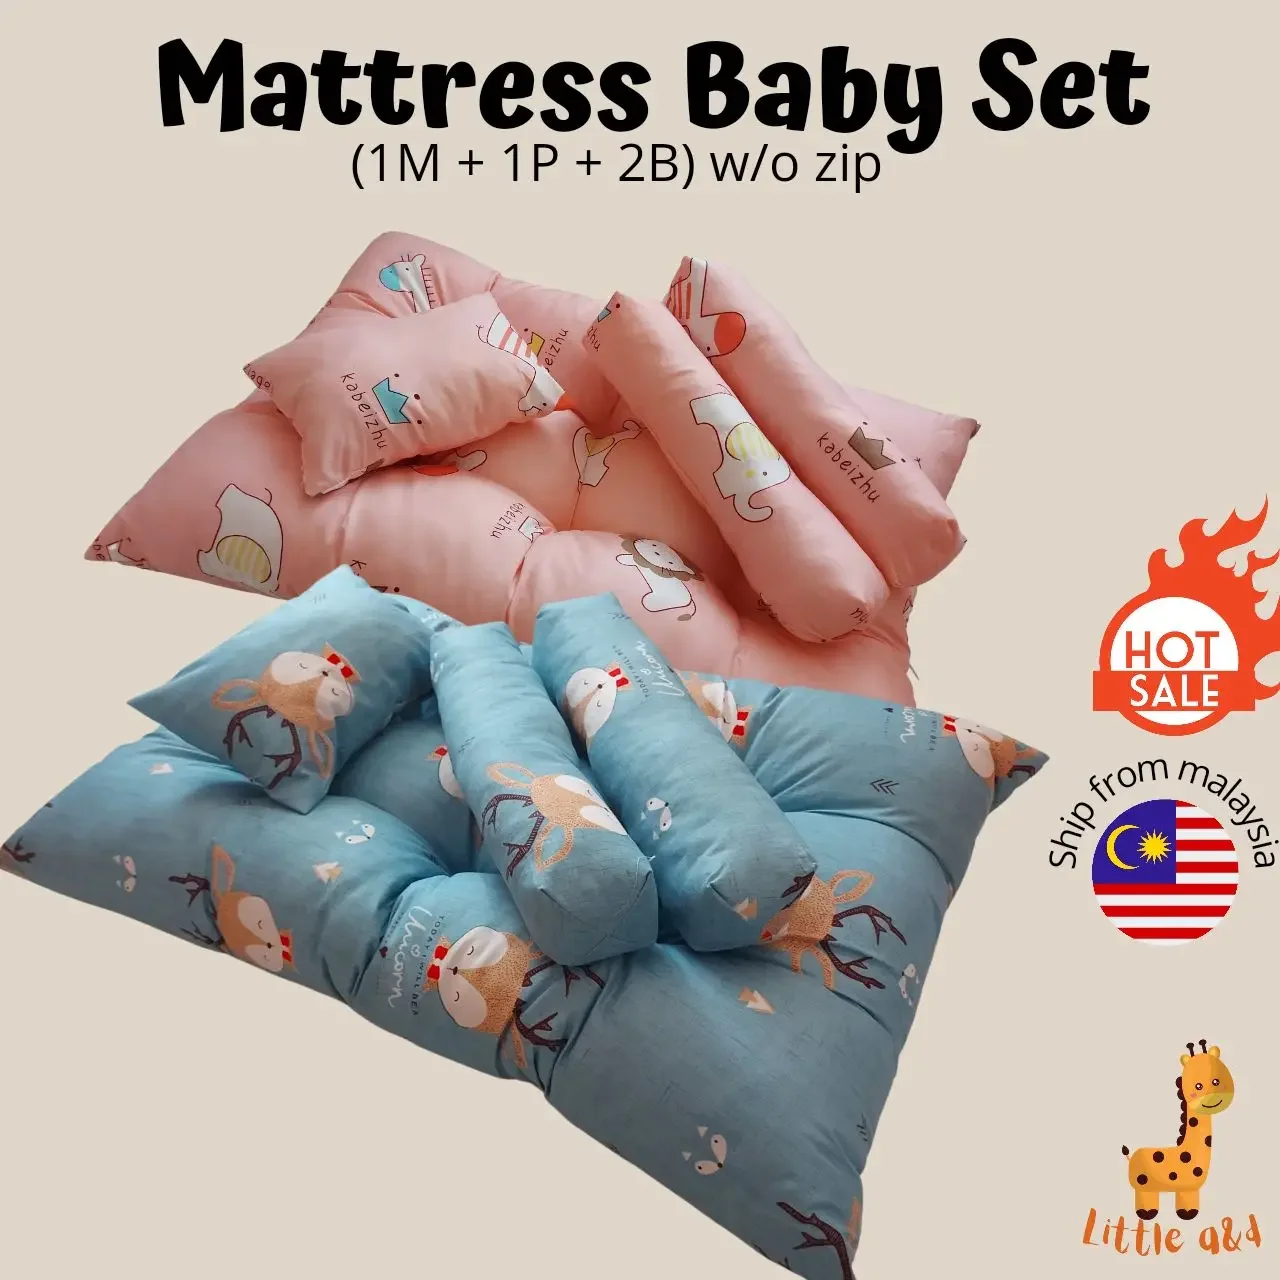 Tilam Bayi Set Jimat 3in1/Newborn Baby Mattress 3in1 set/ 1 x Pillow 2 x Bolster 1x Tilam Baby Murah